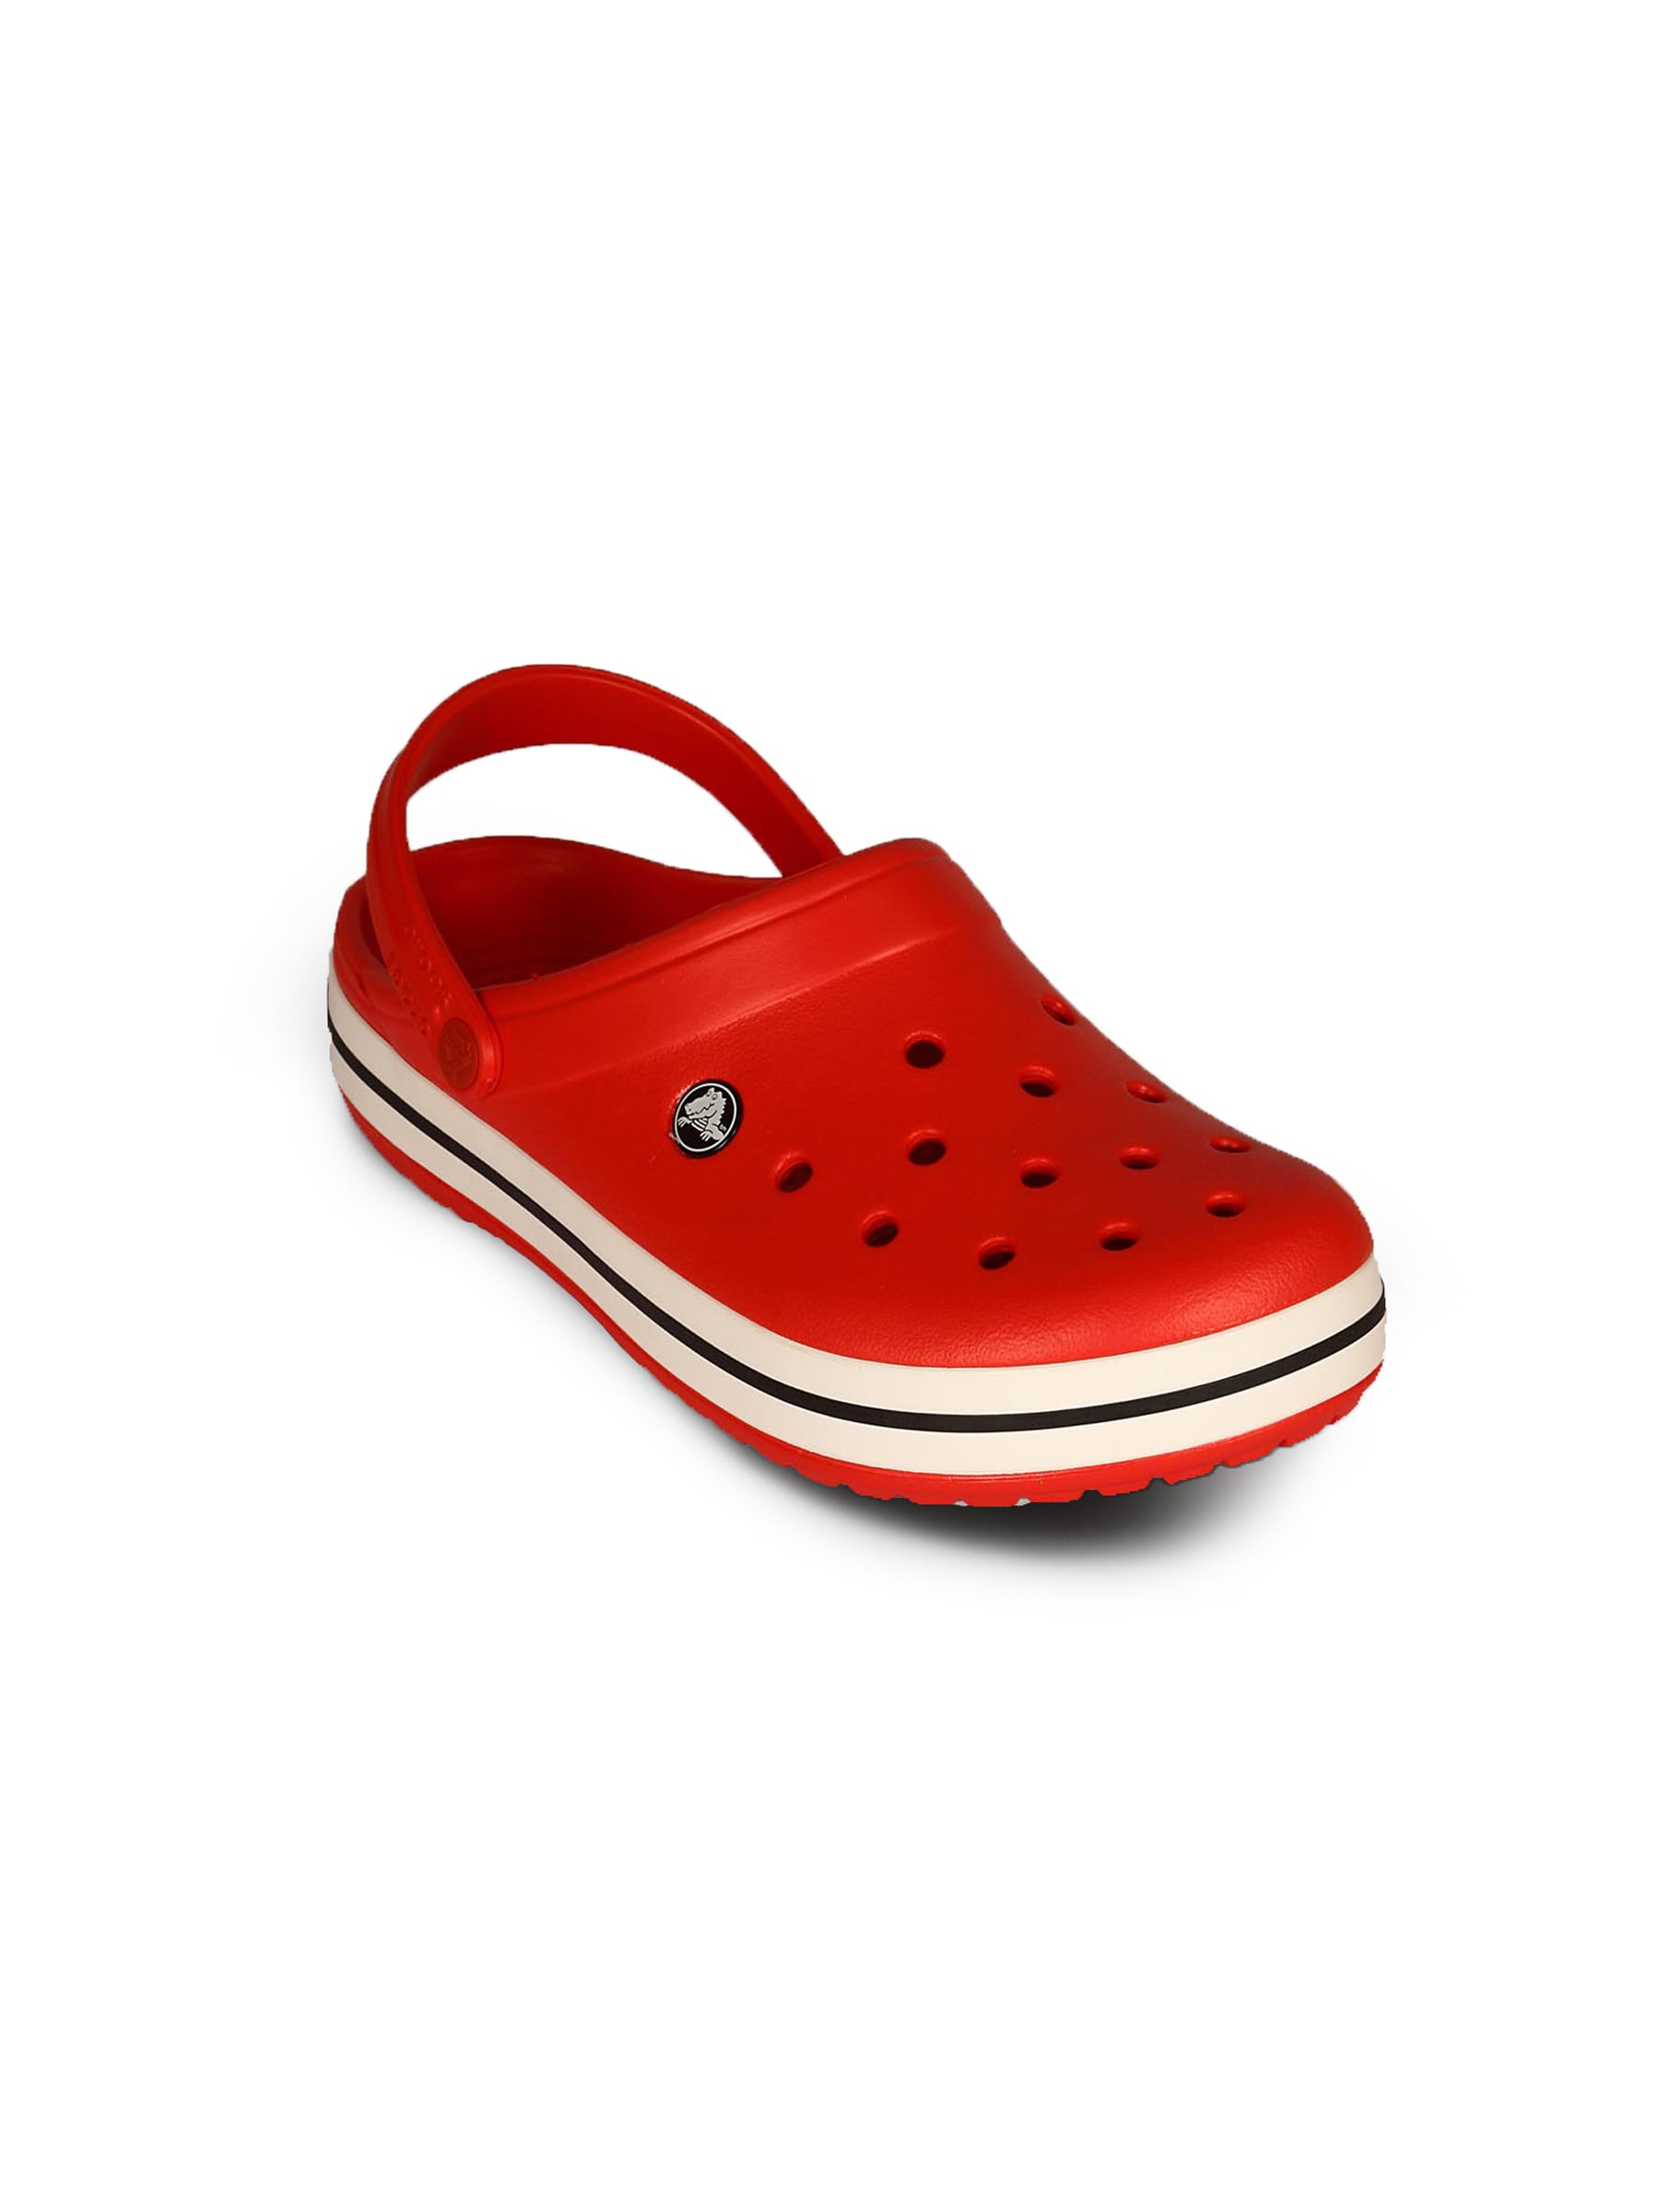 Crocs Unisex Crocband Red Sandal